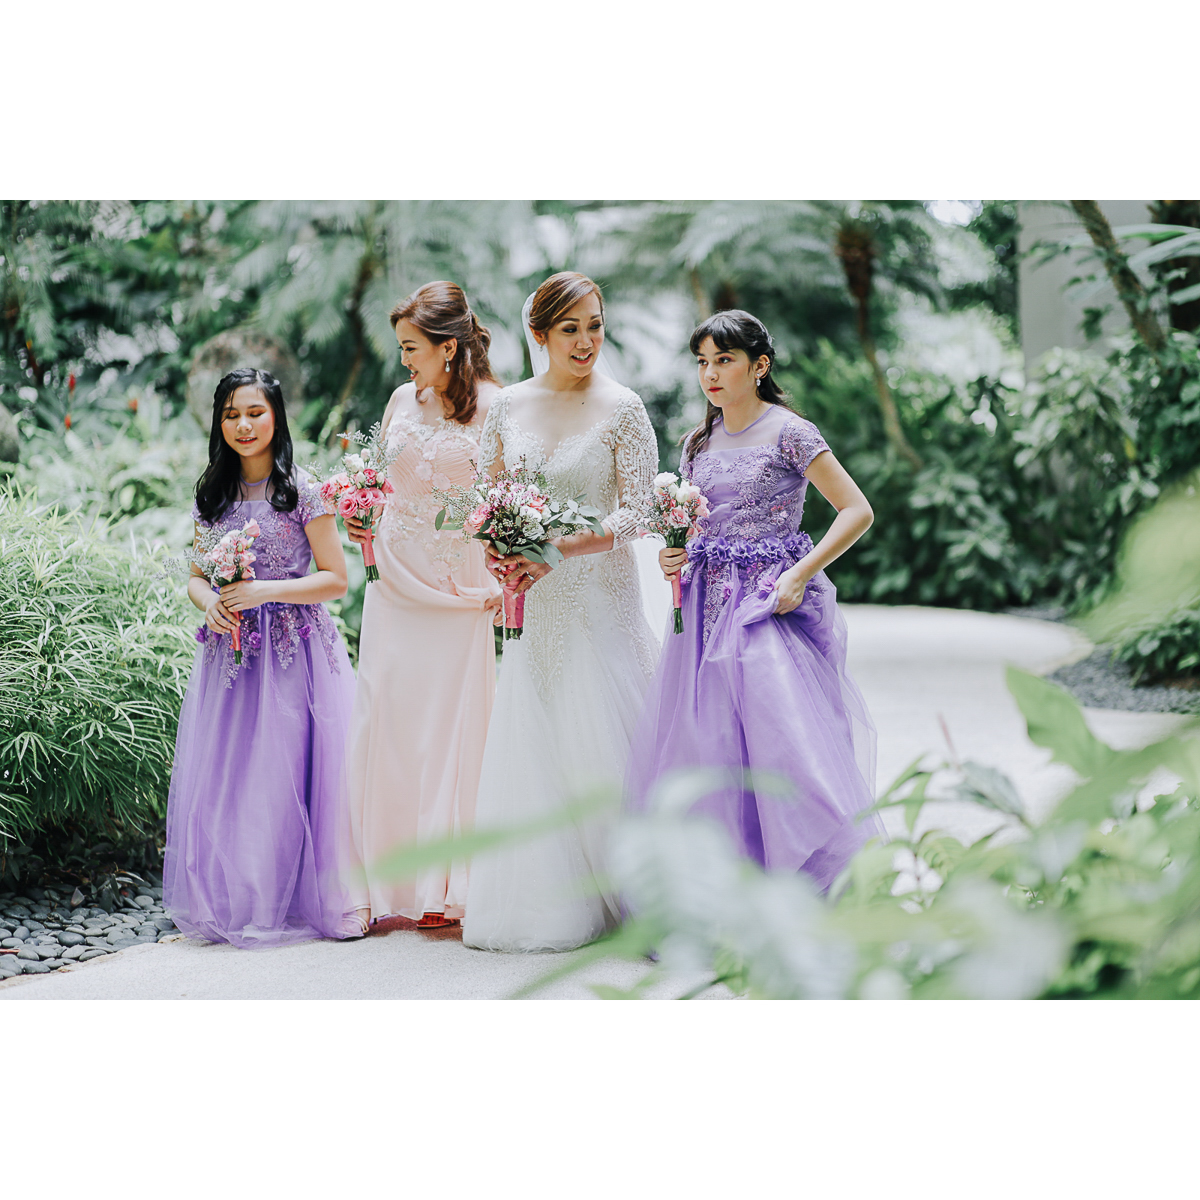 shang mactan wedding0029 - Coleen & Seigfred's Shangrila Mactan Cebu Destination Wedding